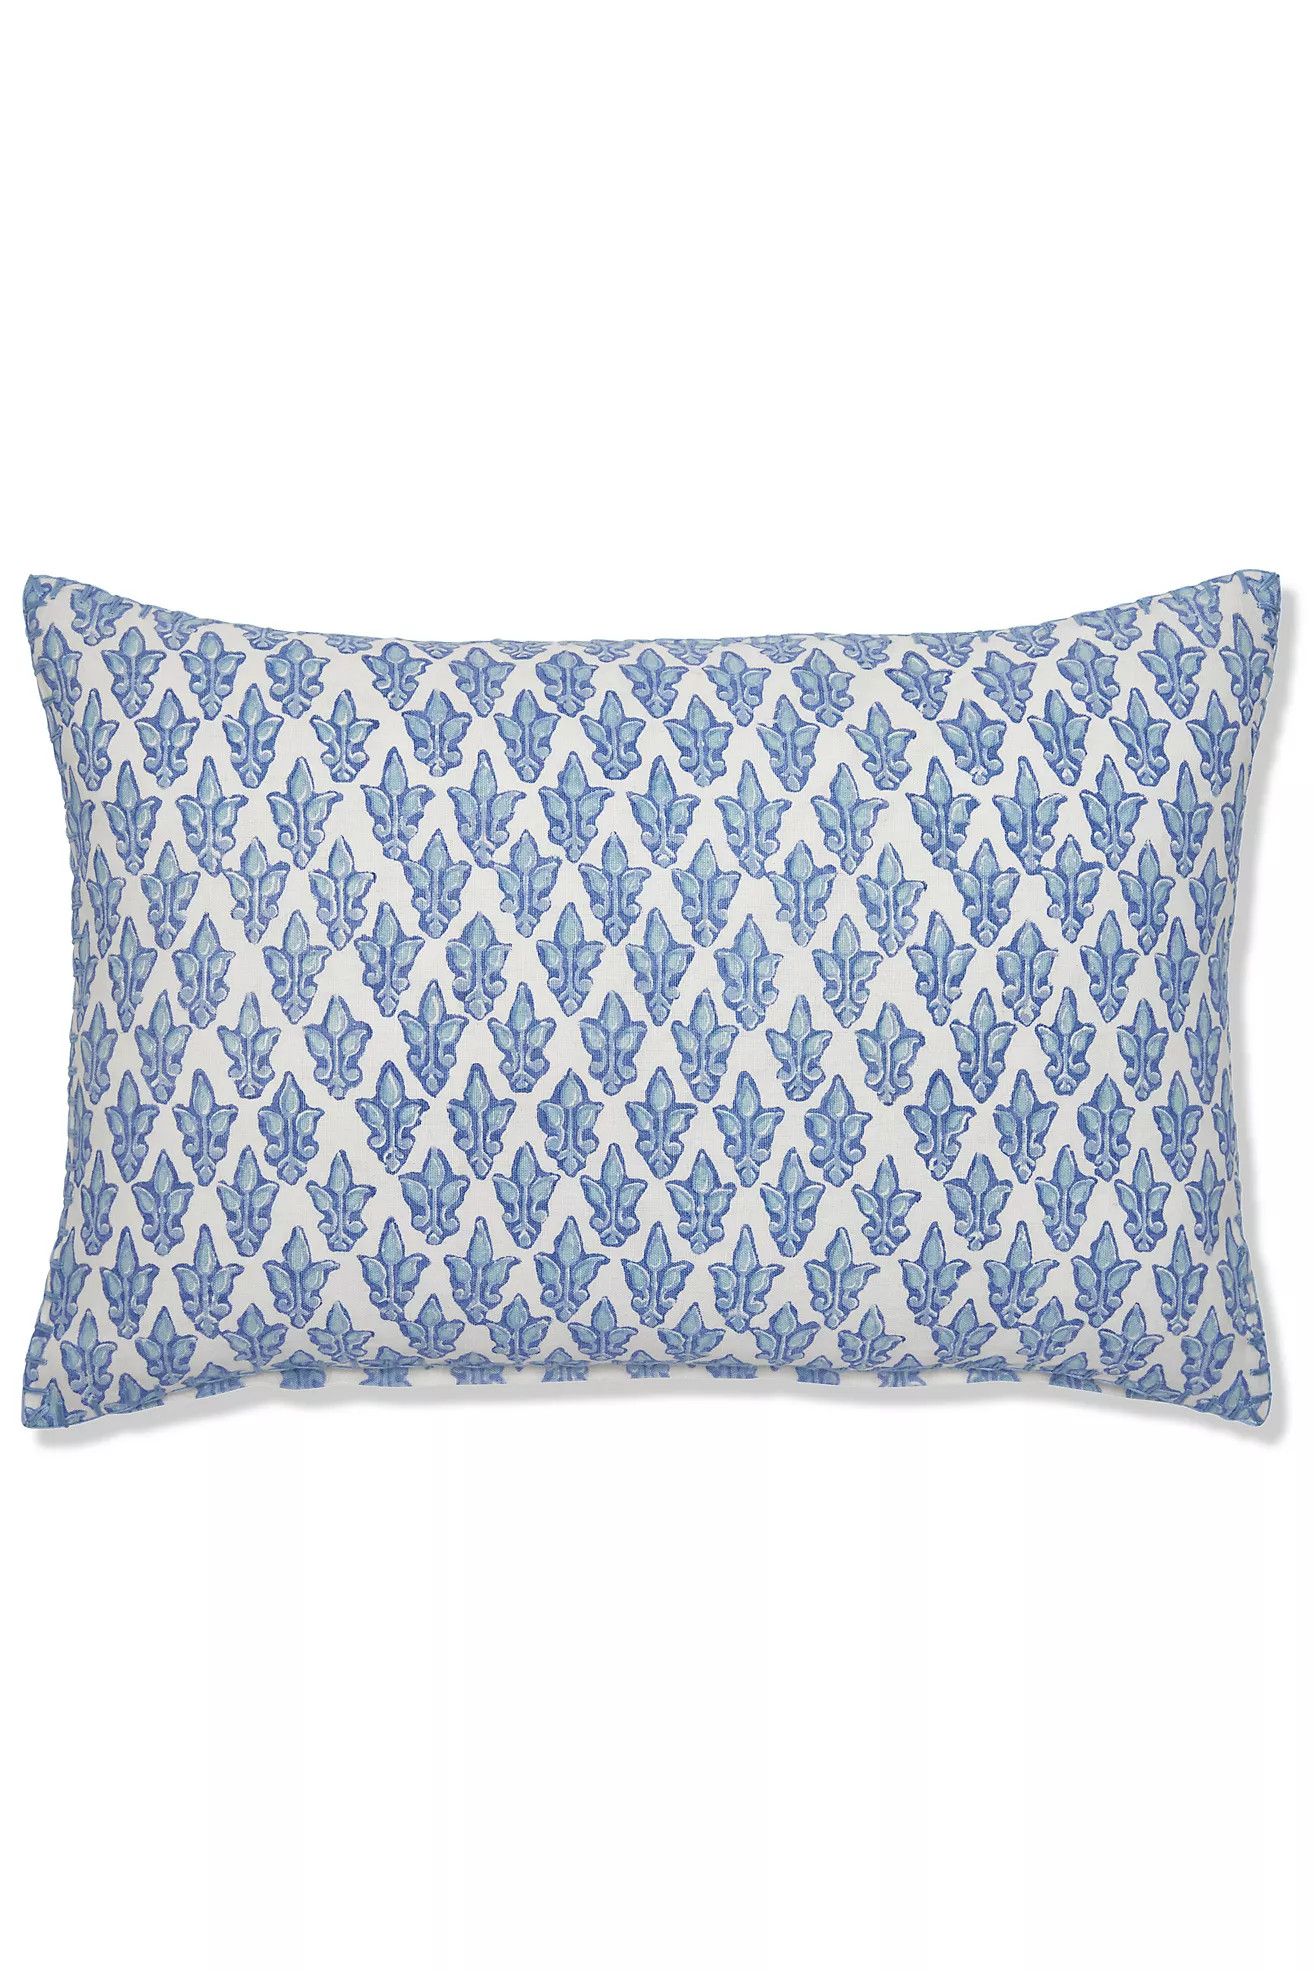 John Robshaw Ekaveer Decorative Pillow Cover | Anthropologie (US)